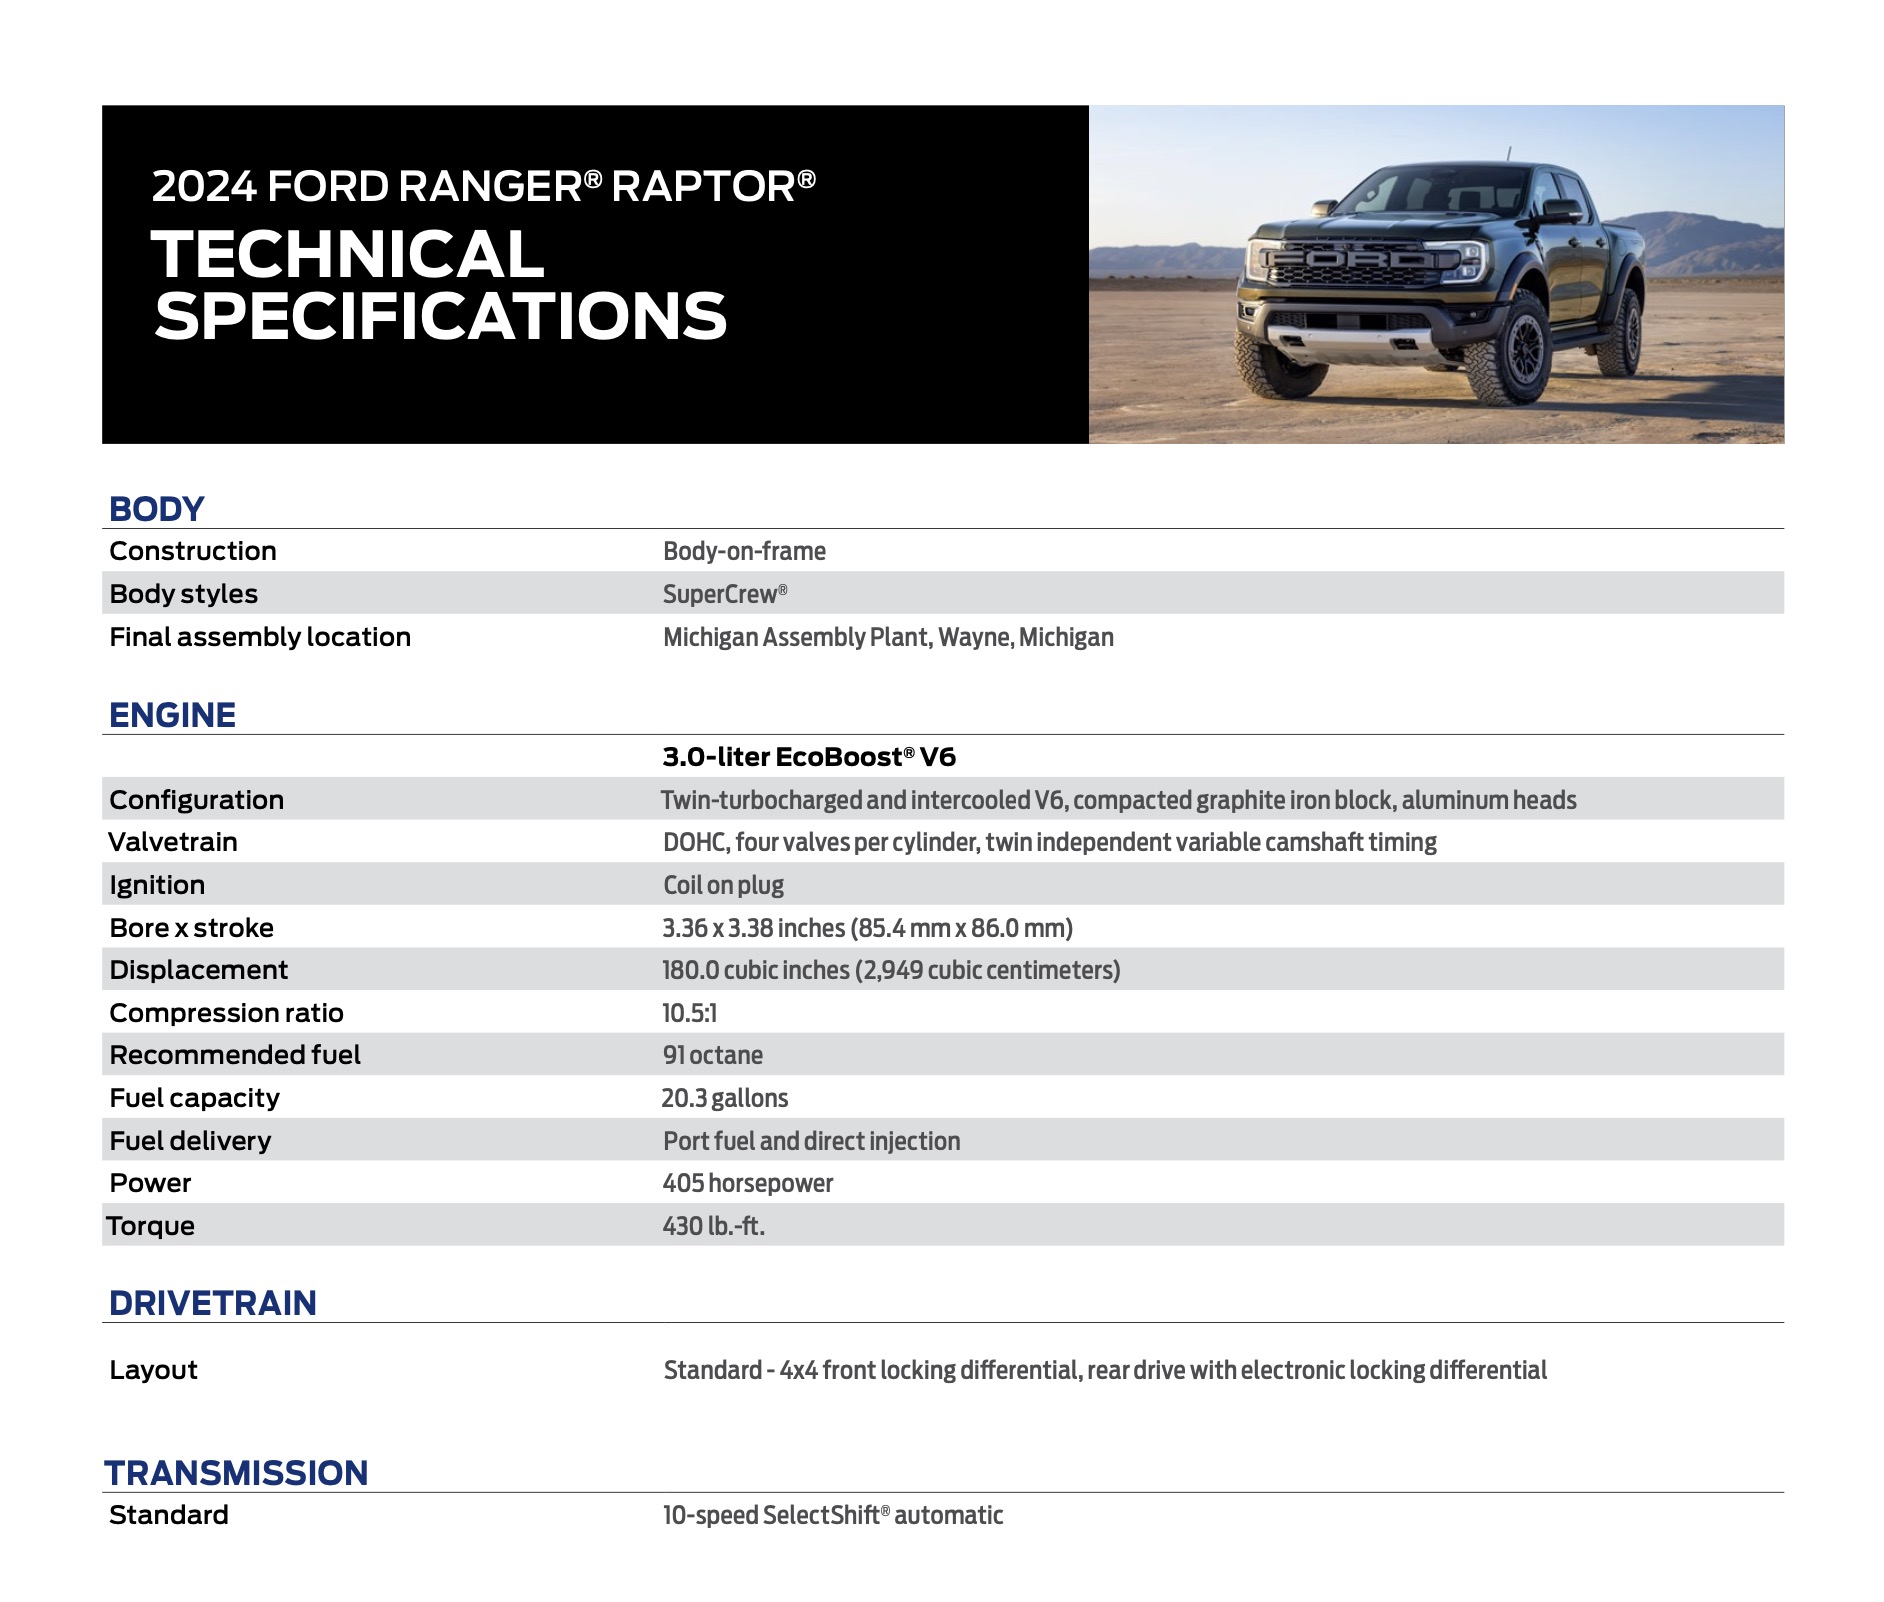 Ford Ranger 2024 Ranger Raptor Arrives With 405HP @ $56,960 Starting Price! 🦖 Screenshot 2023-05-10 at 3.54.18 AM